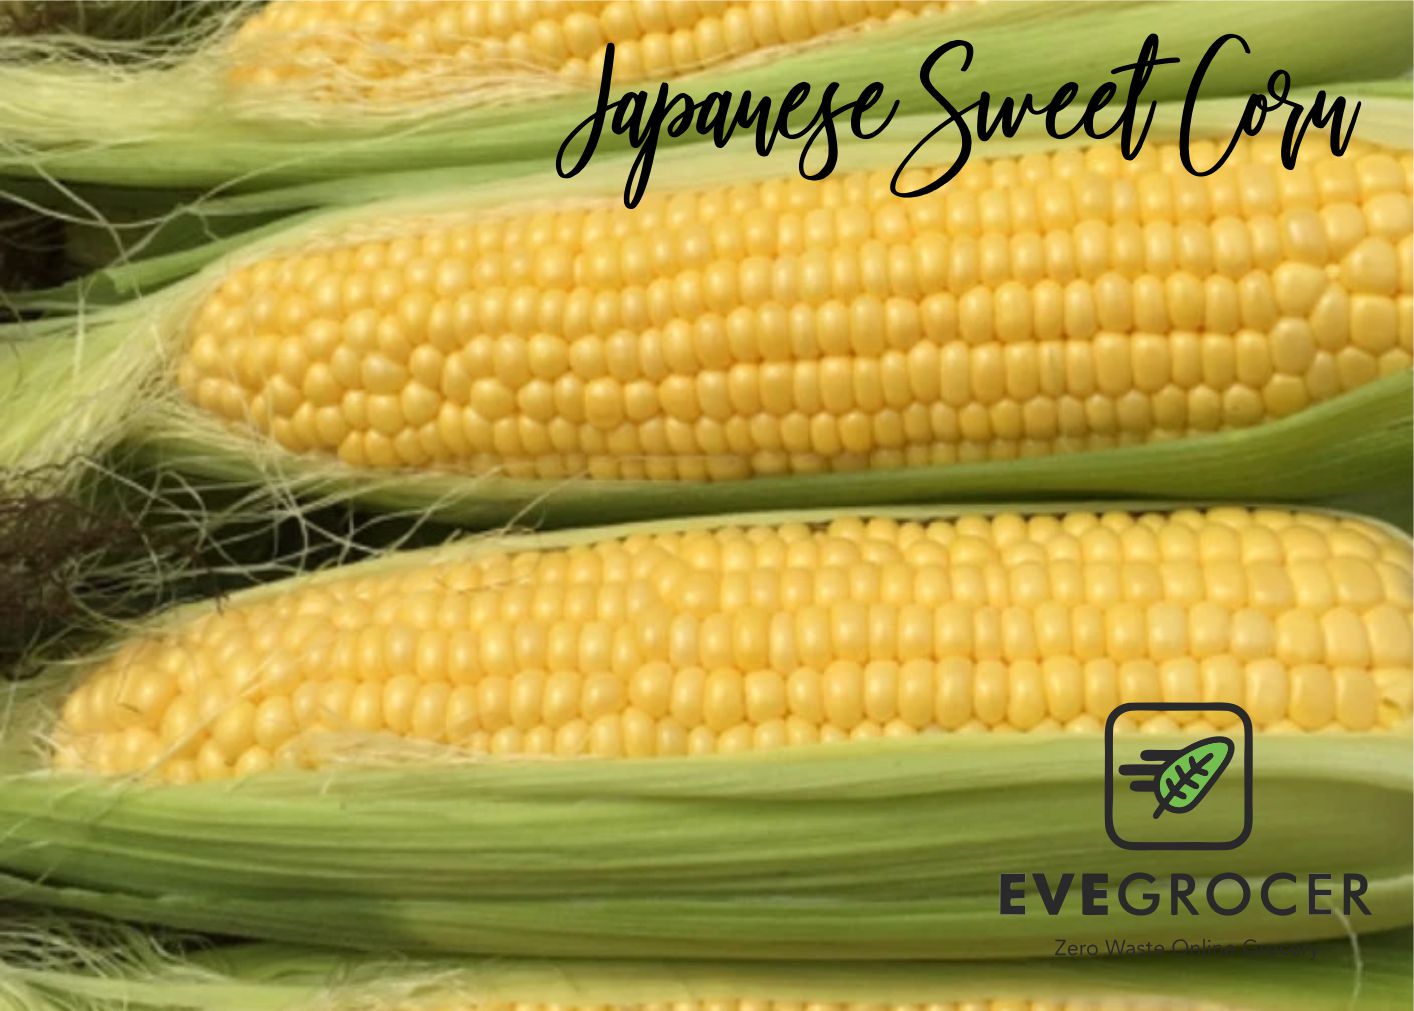 Japanese Sweet corn